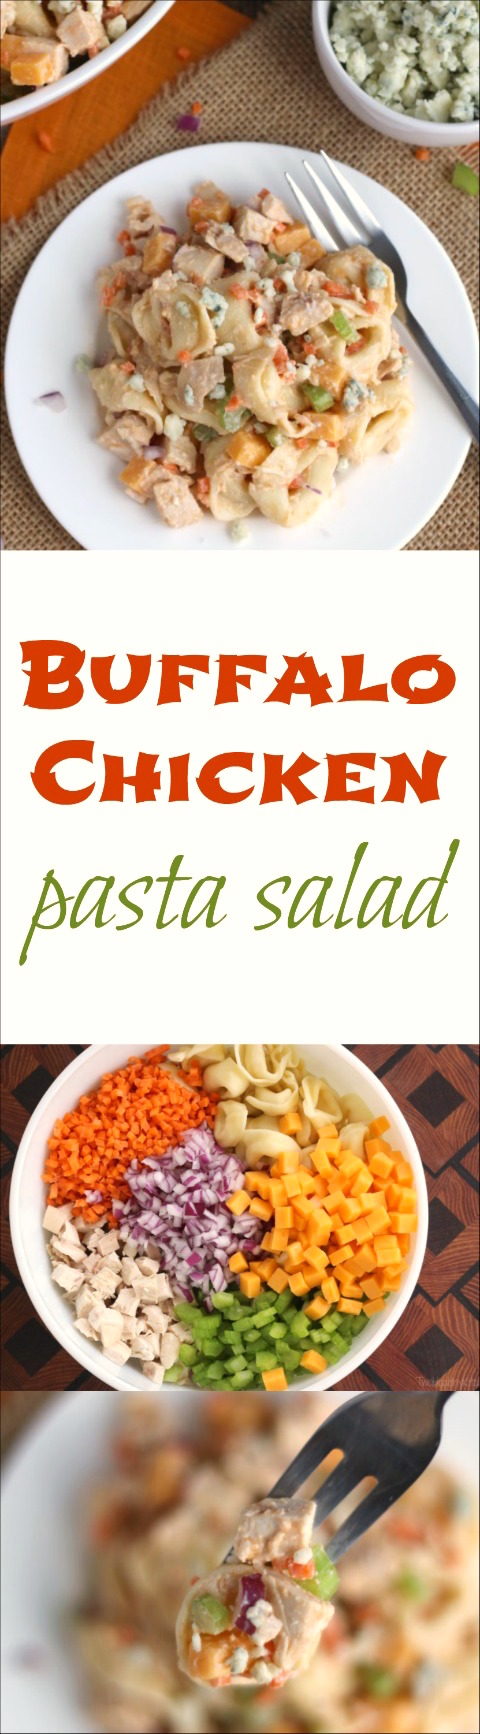 Buffalo Chicken Pasta Salad Recipe {www.TwoHealthyKitchens.com}